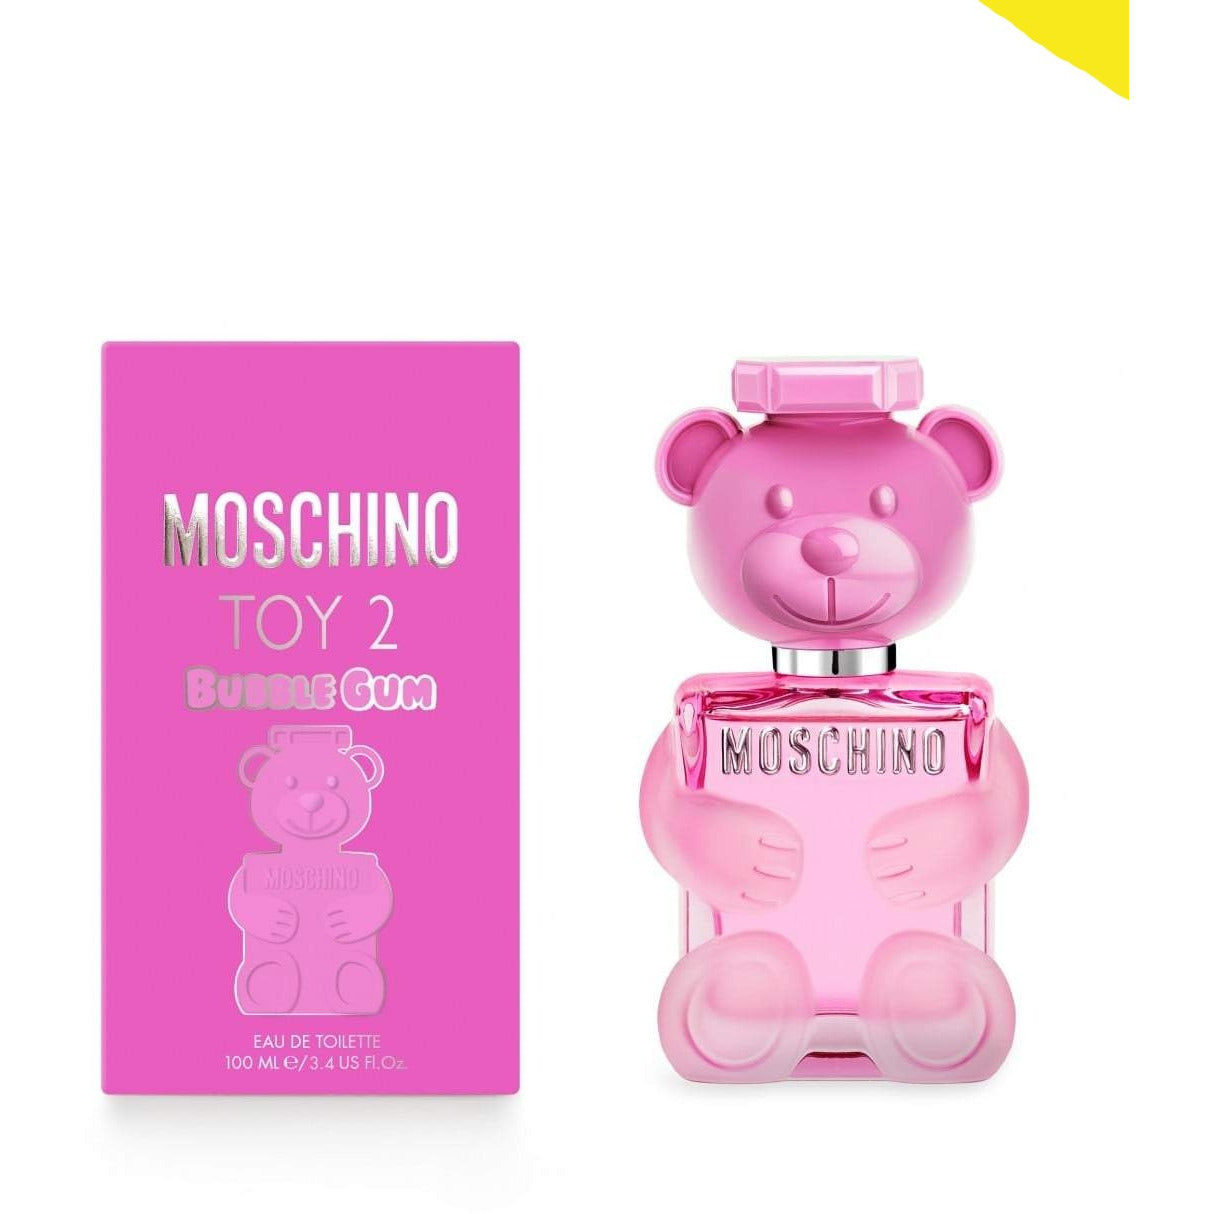 moschino-toy-2-bubble-gum-perfume